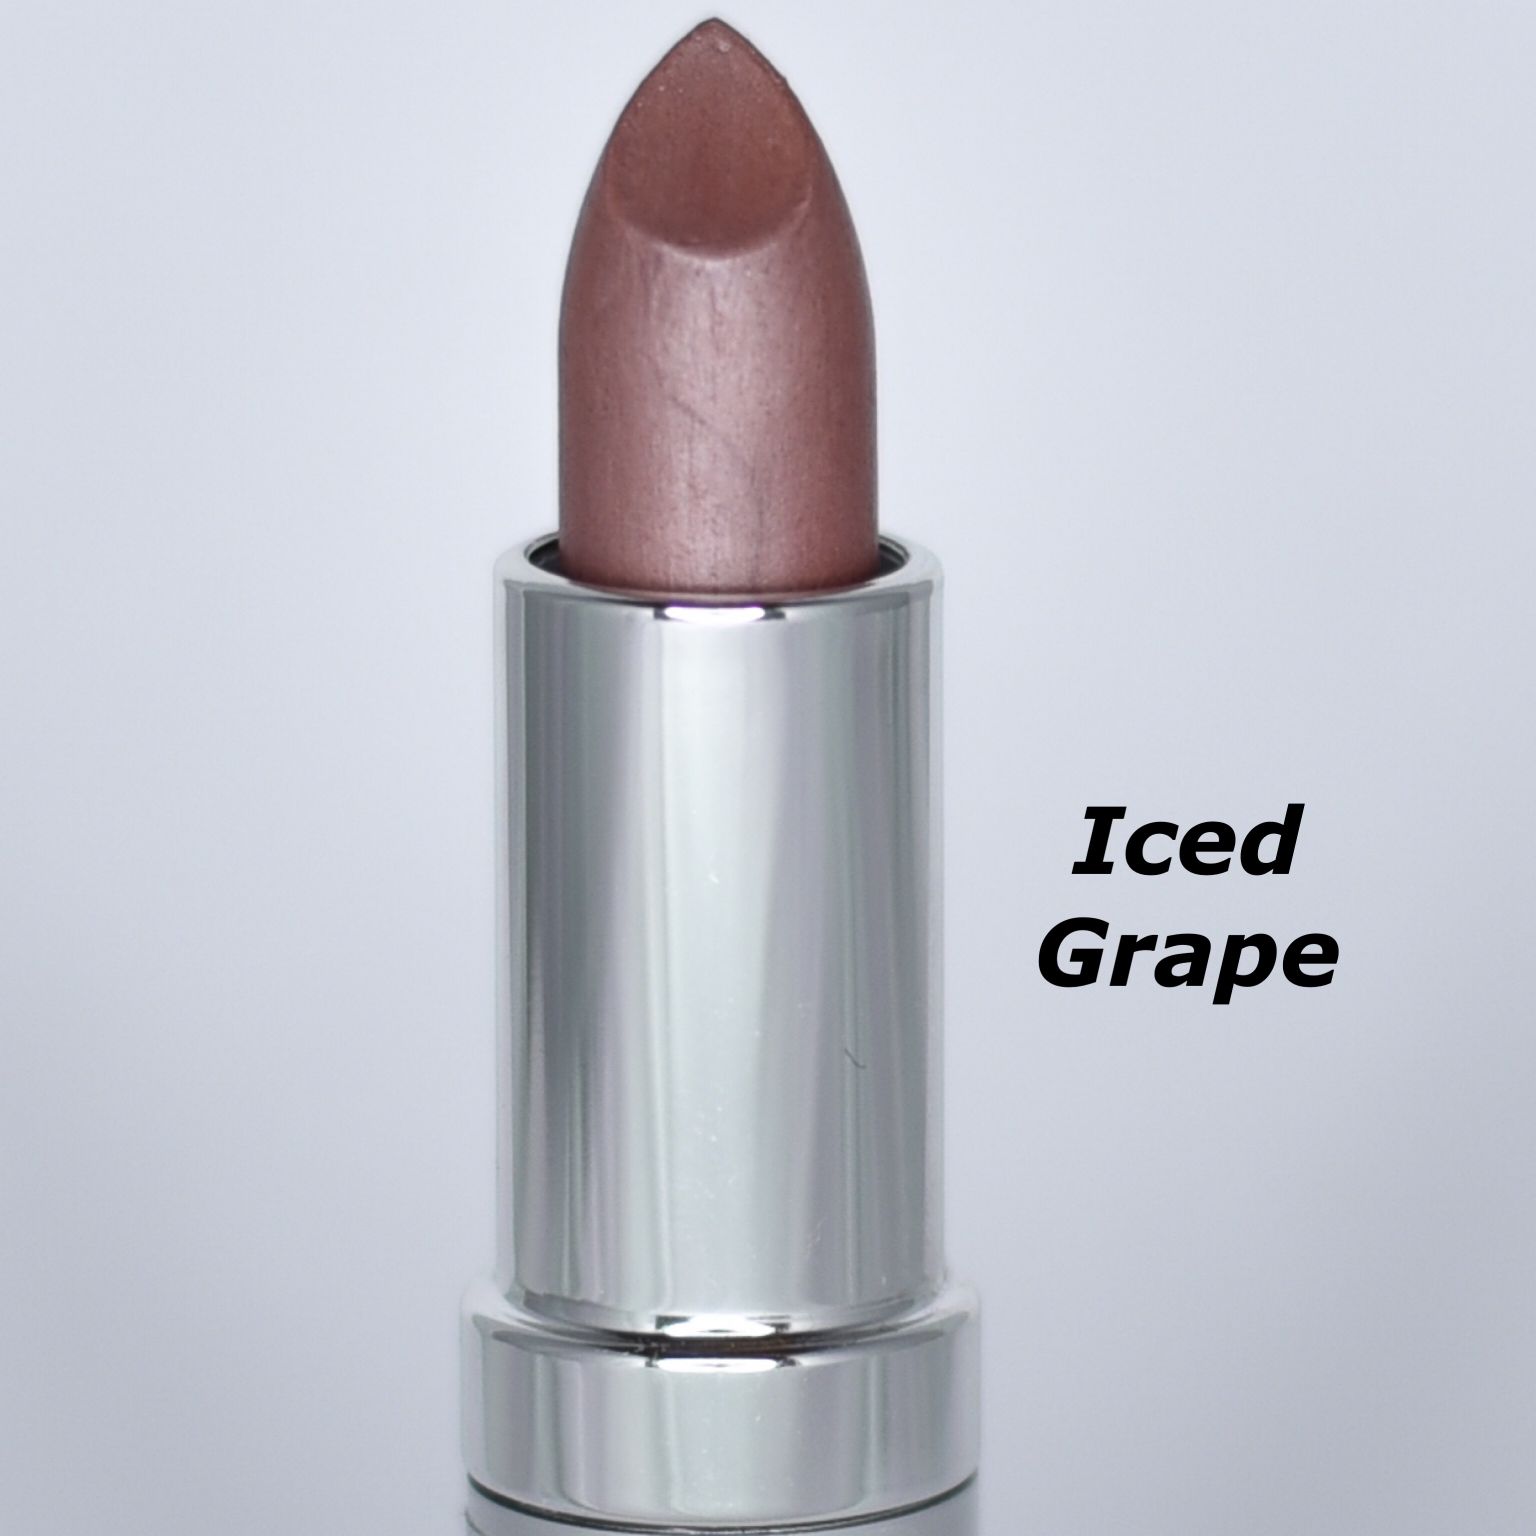 Iced Grape Lipstick